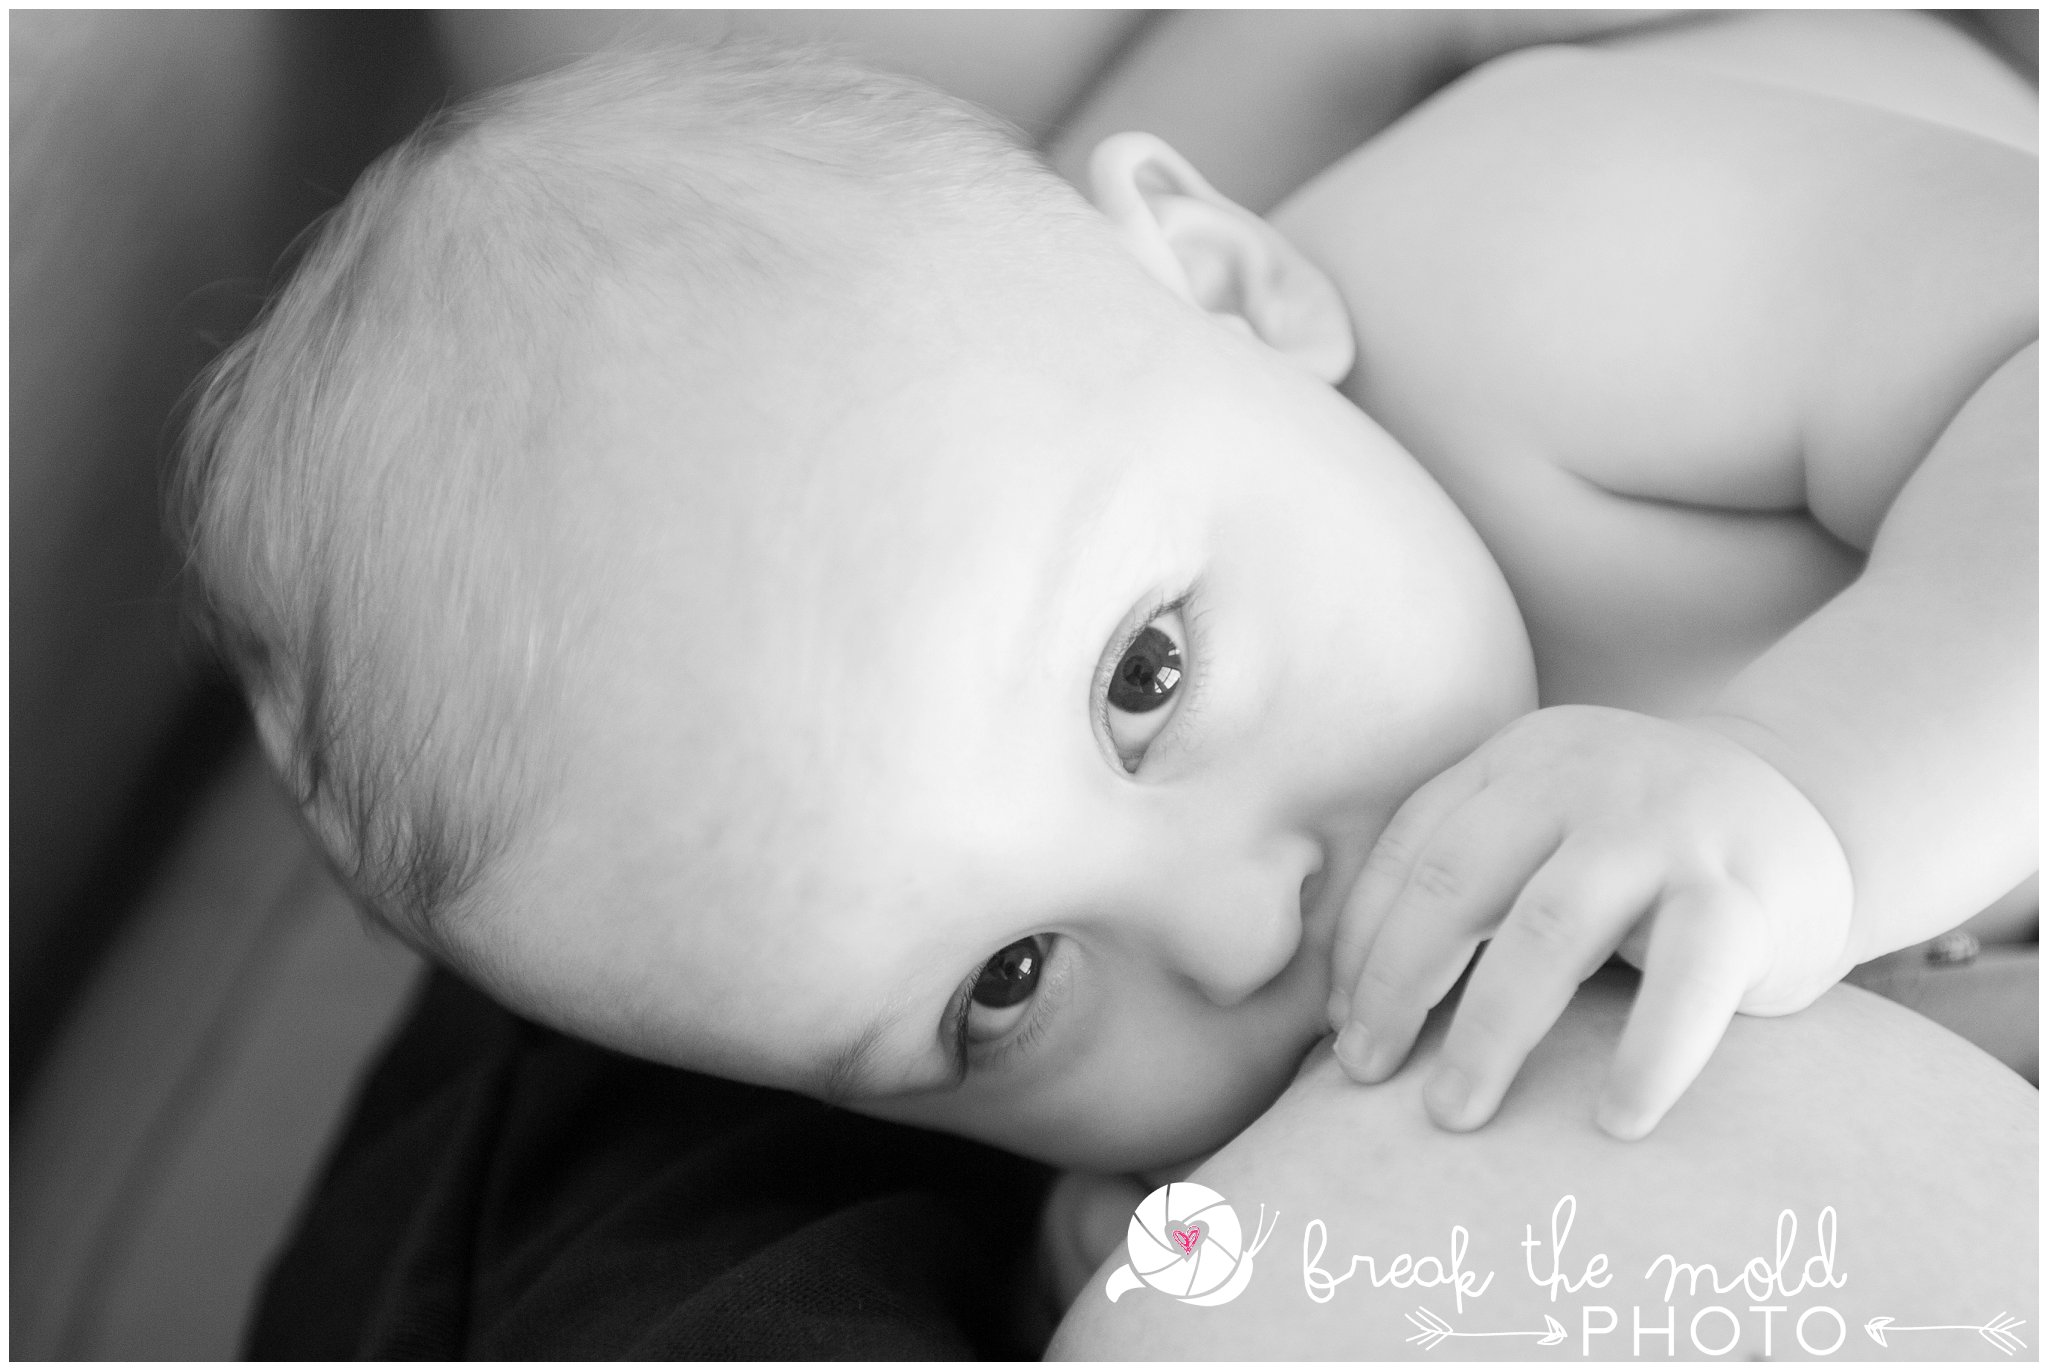 break-the-mold-photo-nursing-body-love-baby-pregnant-women-powerful-breastfeeding-sessions_7214.jpg